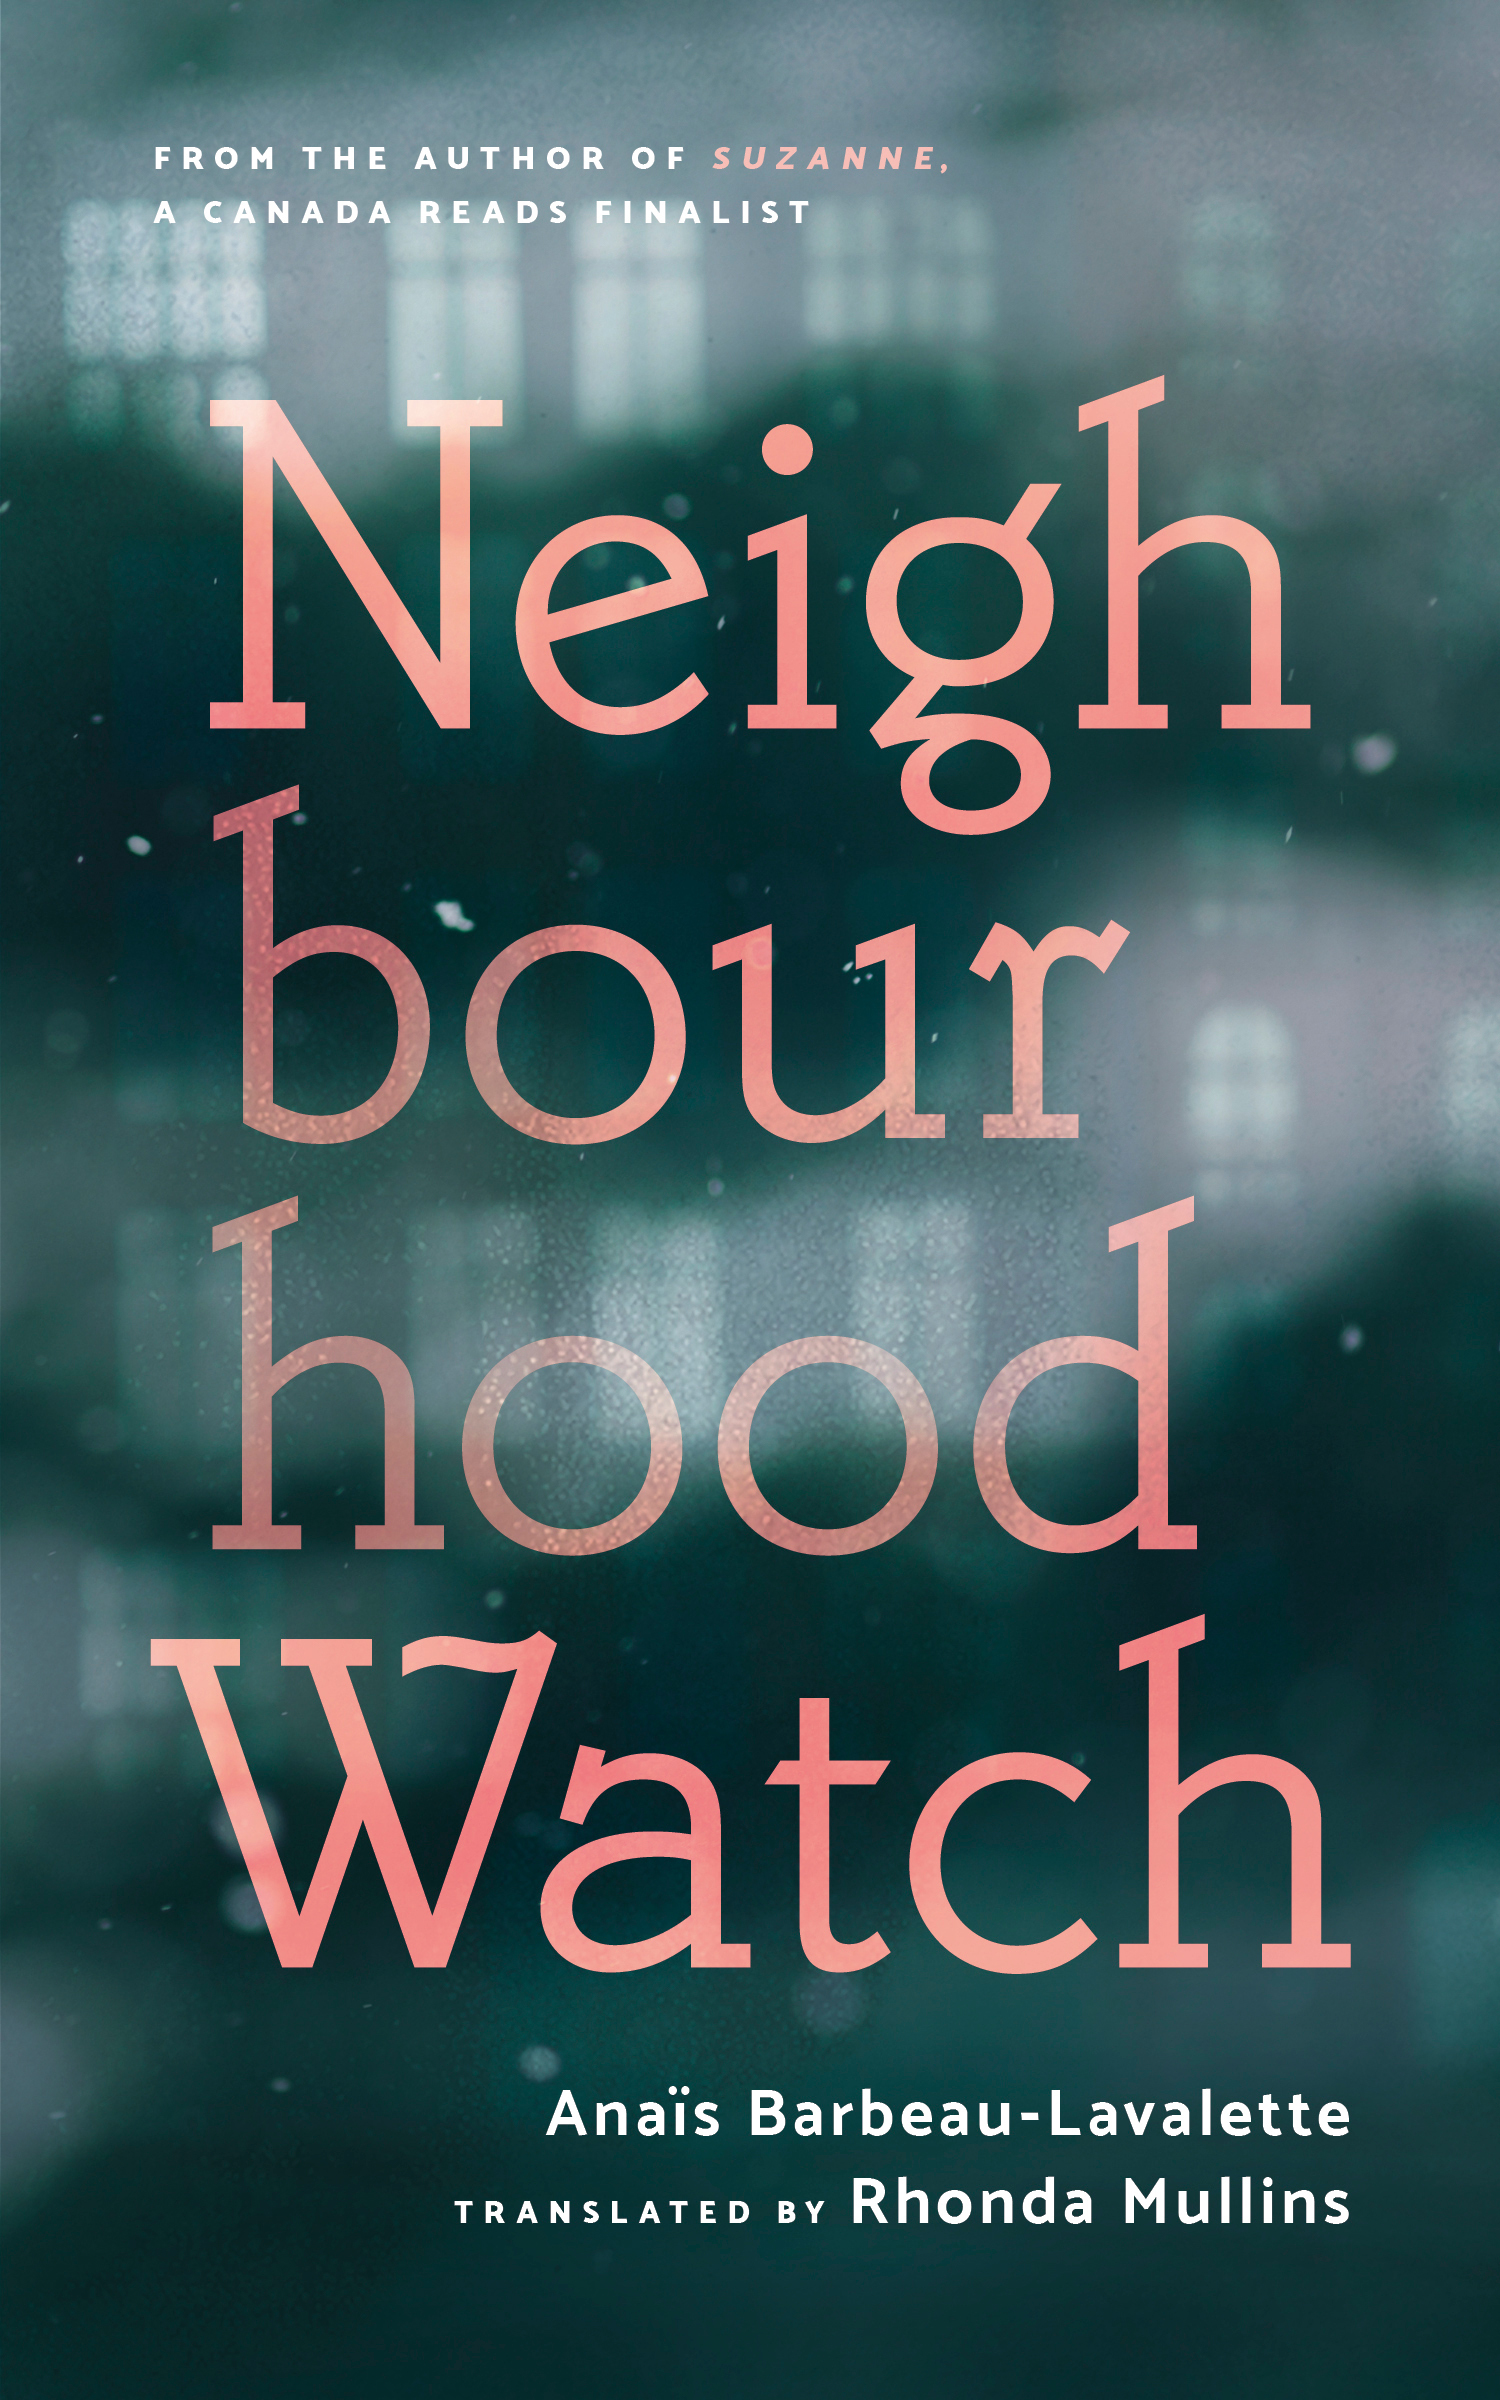 Anaïs Barbeau-Lavalette's Neighbourhood Watch